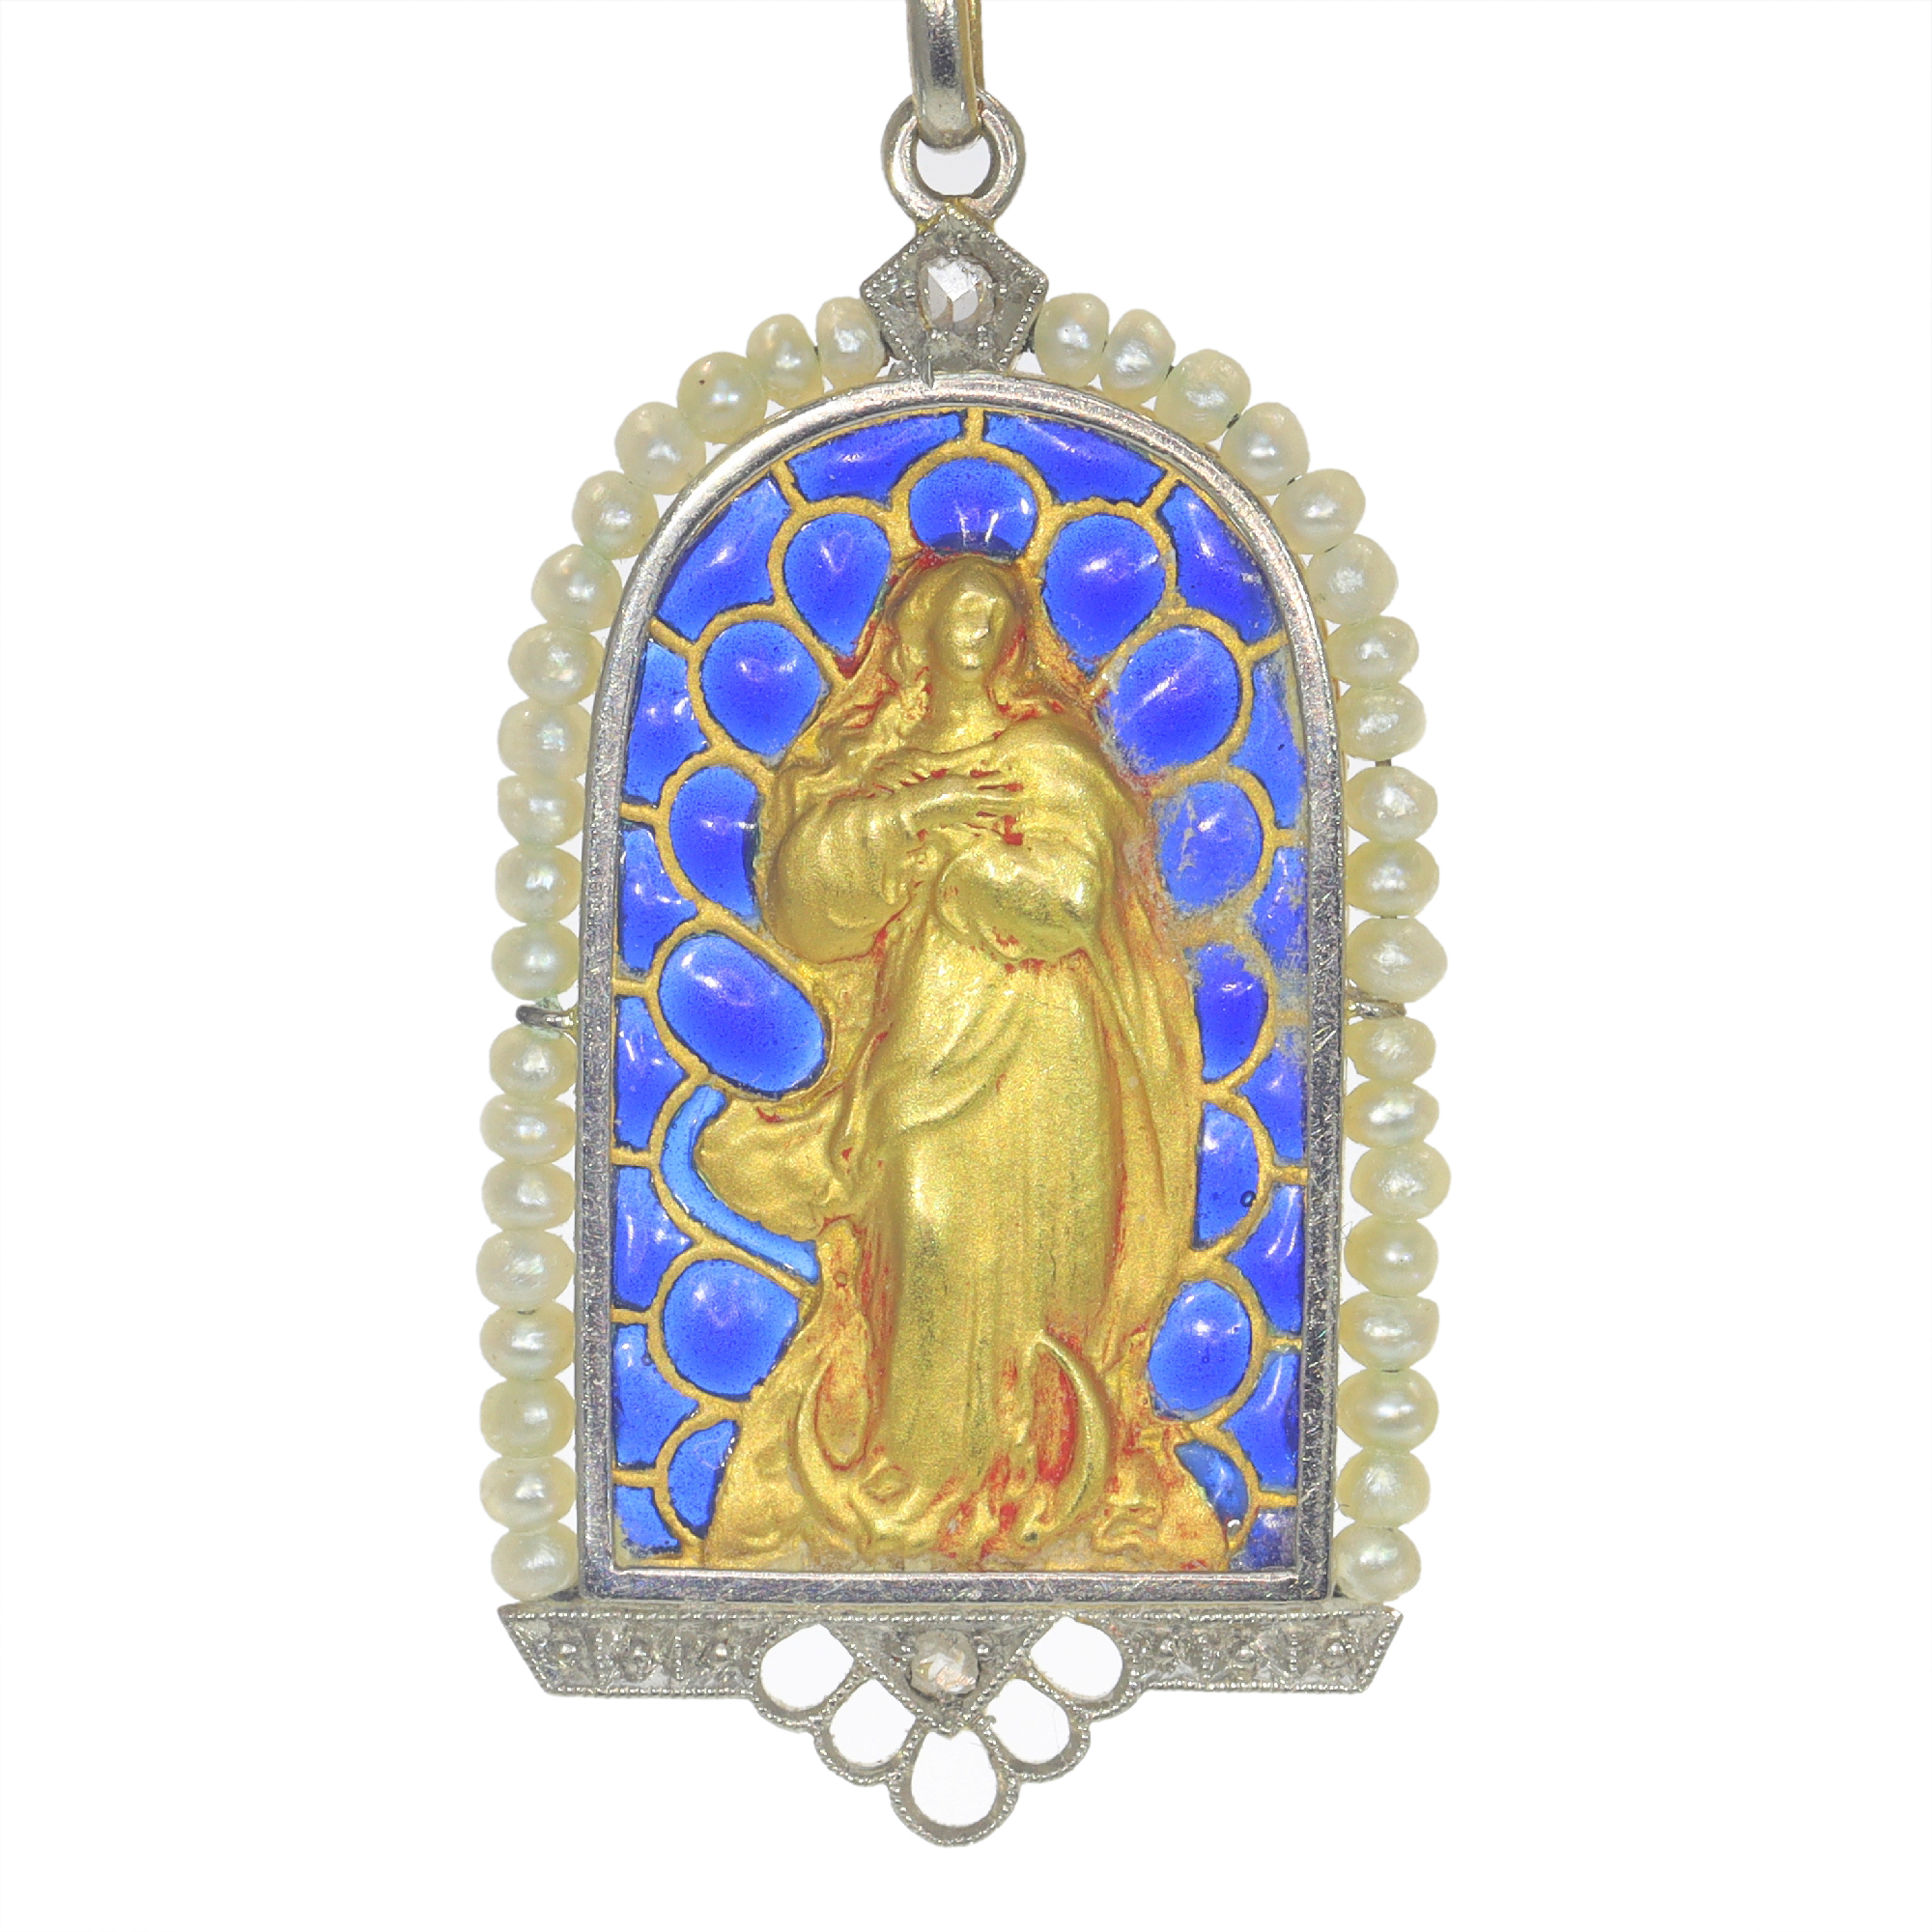 Vintage antique 18K gold pendant Mother Mary medal with diamonds and plique-a-jour enamel